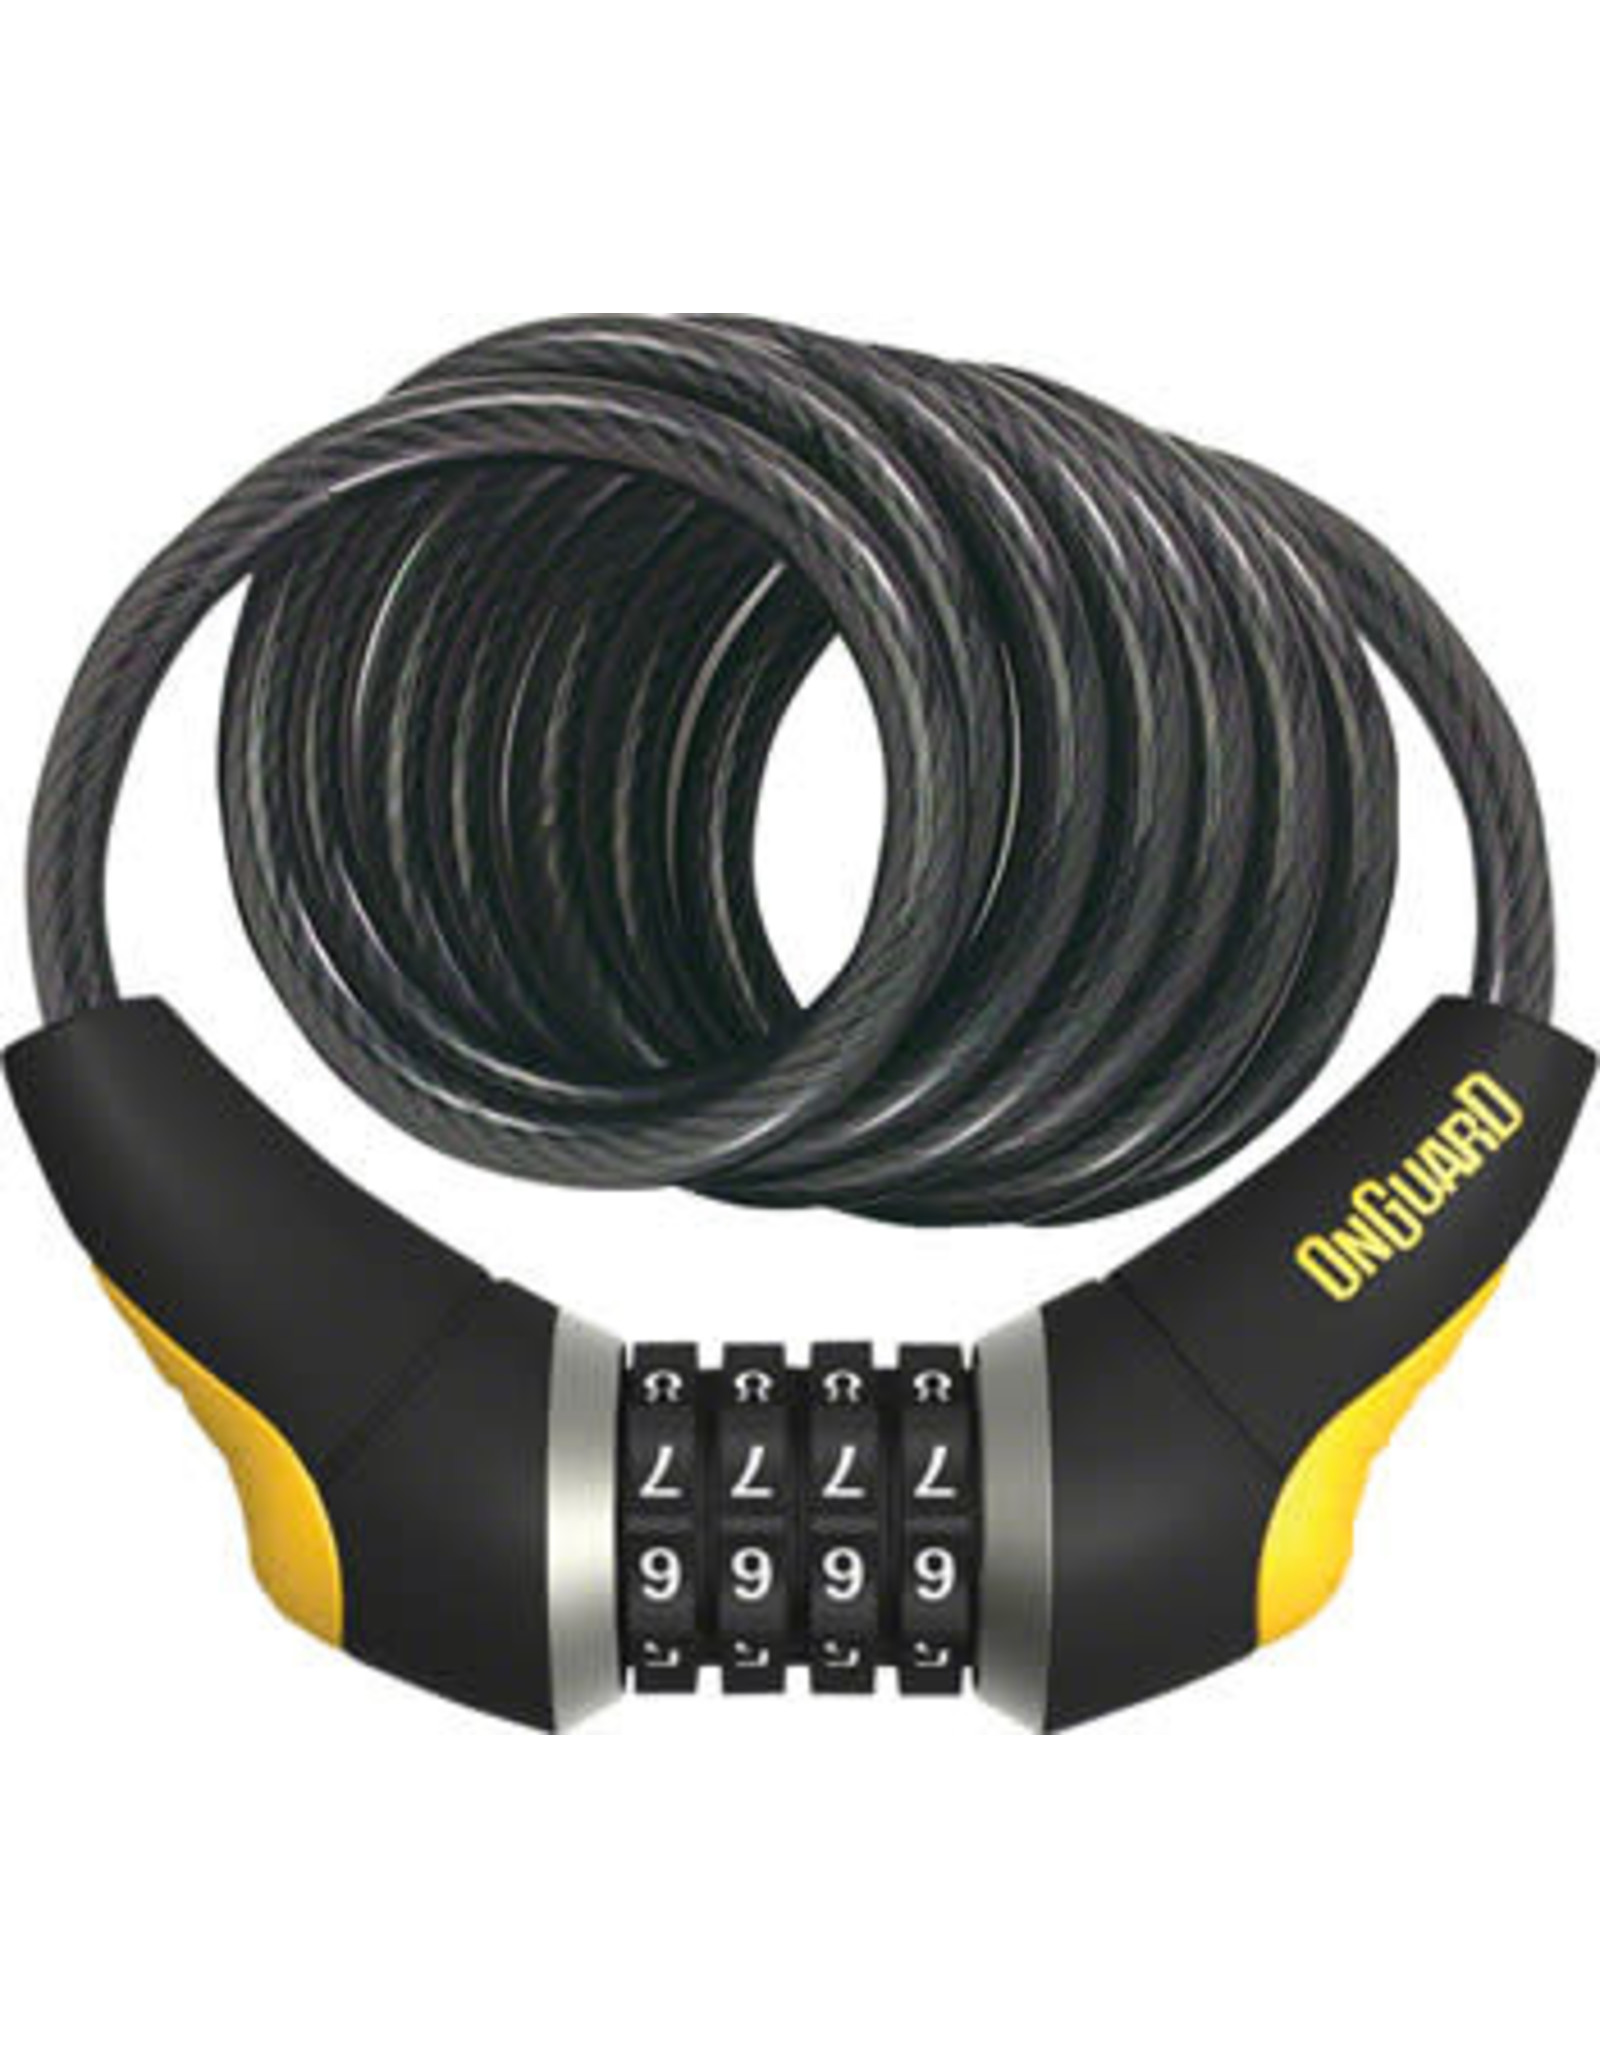 Onguard OnGuard Doberman Combo Cable Lock: 6' x 10mm - Gray/Black/Yellow